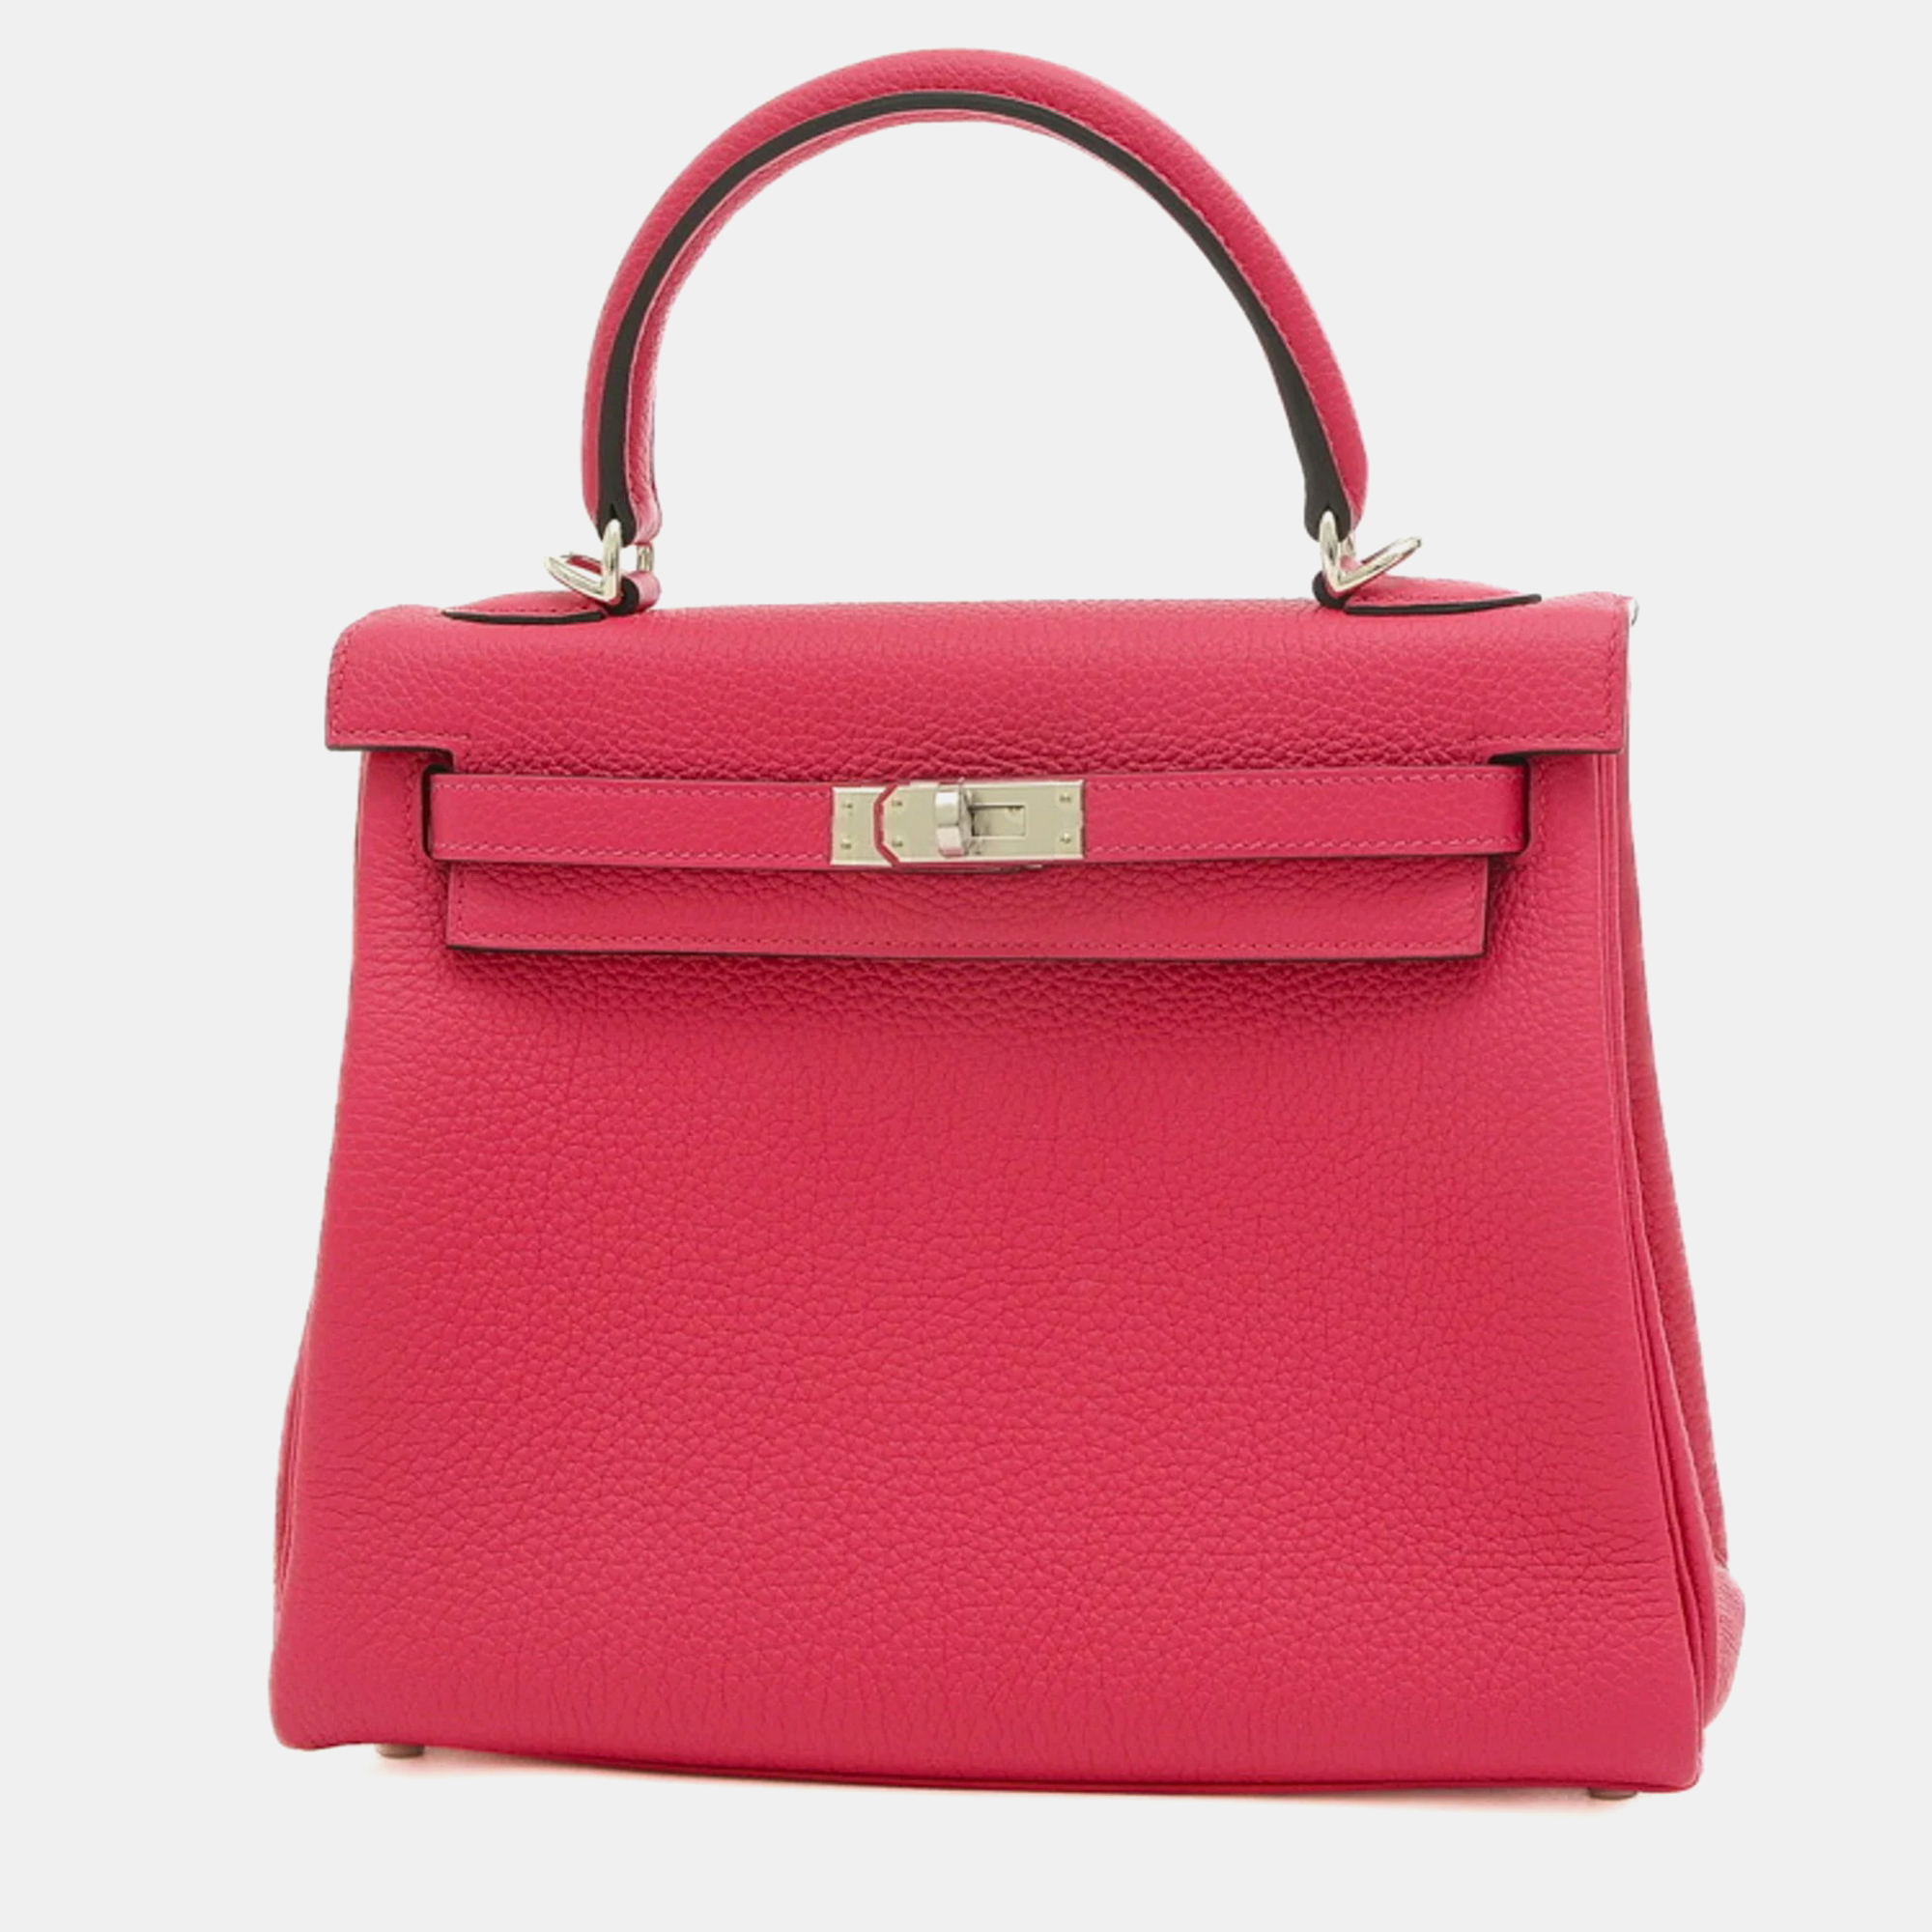 Hermes pink togo leather kelly 25 tote bag